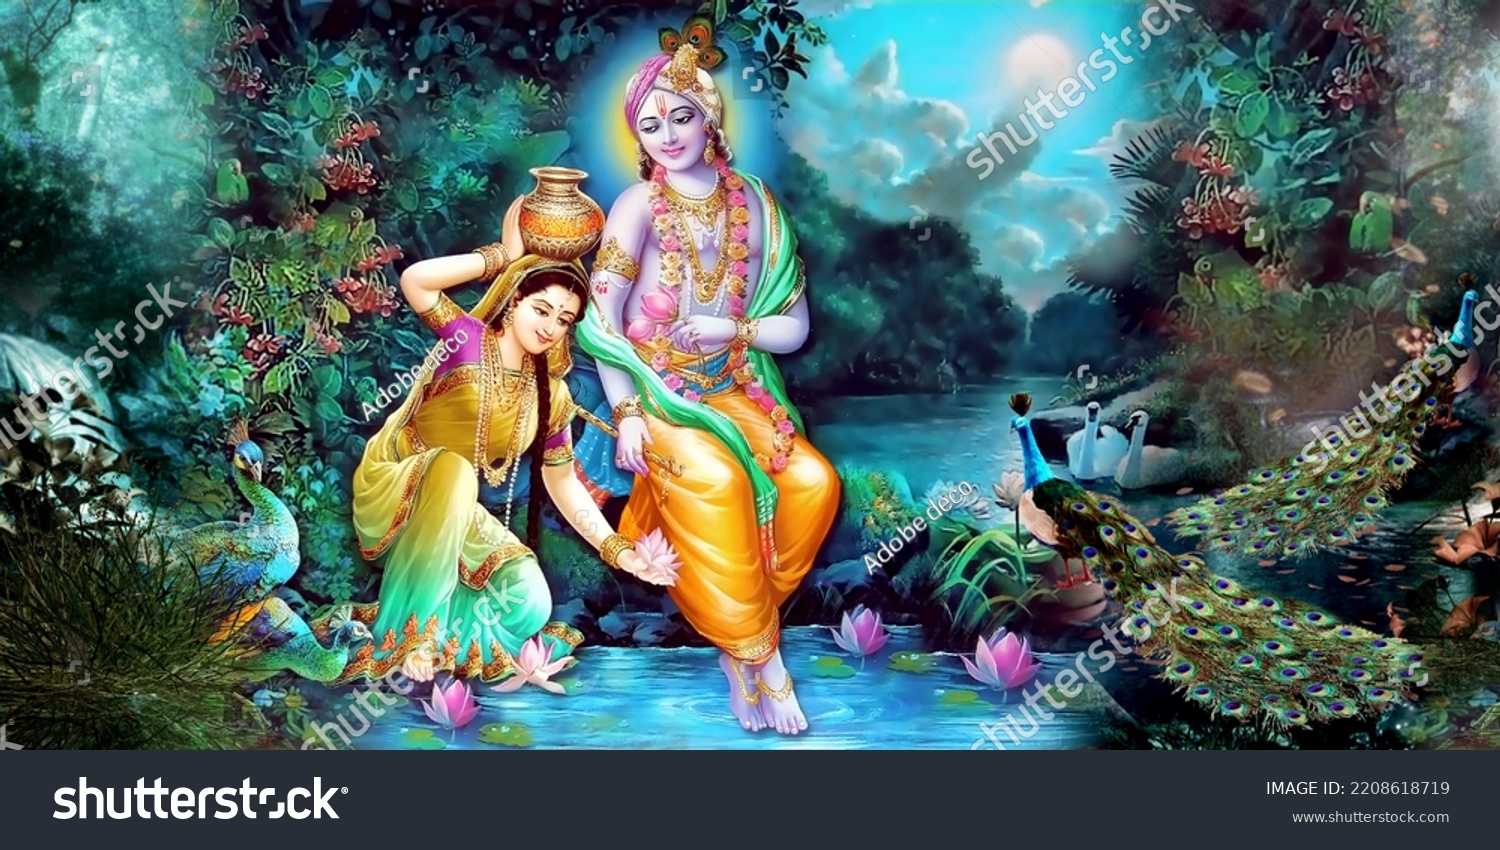 Lord Krishna Wall Poster Lord Radha Stock Illustration 2208618719 Shutterstock 